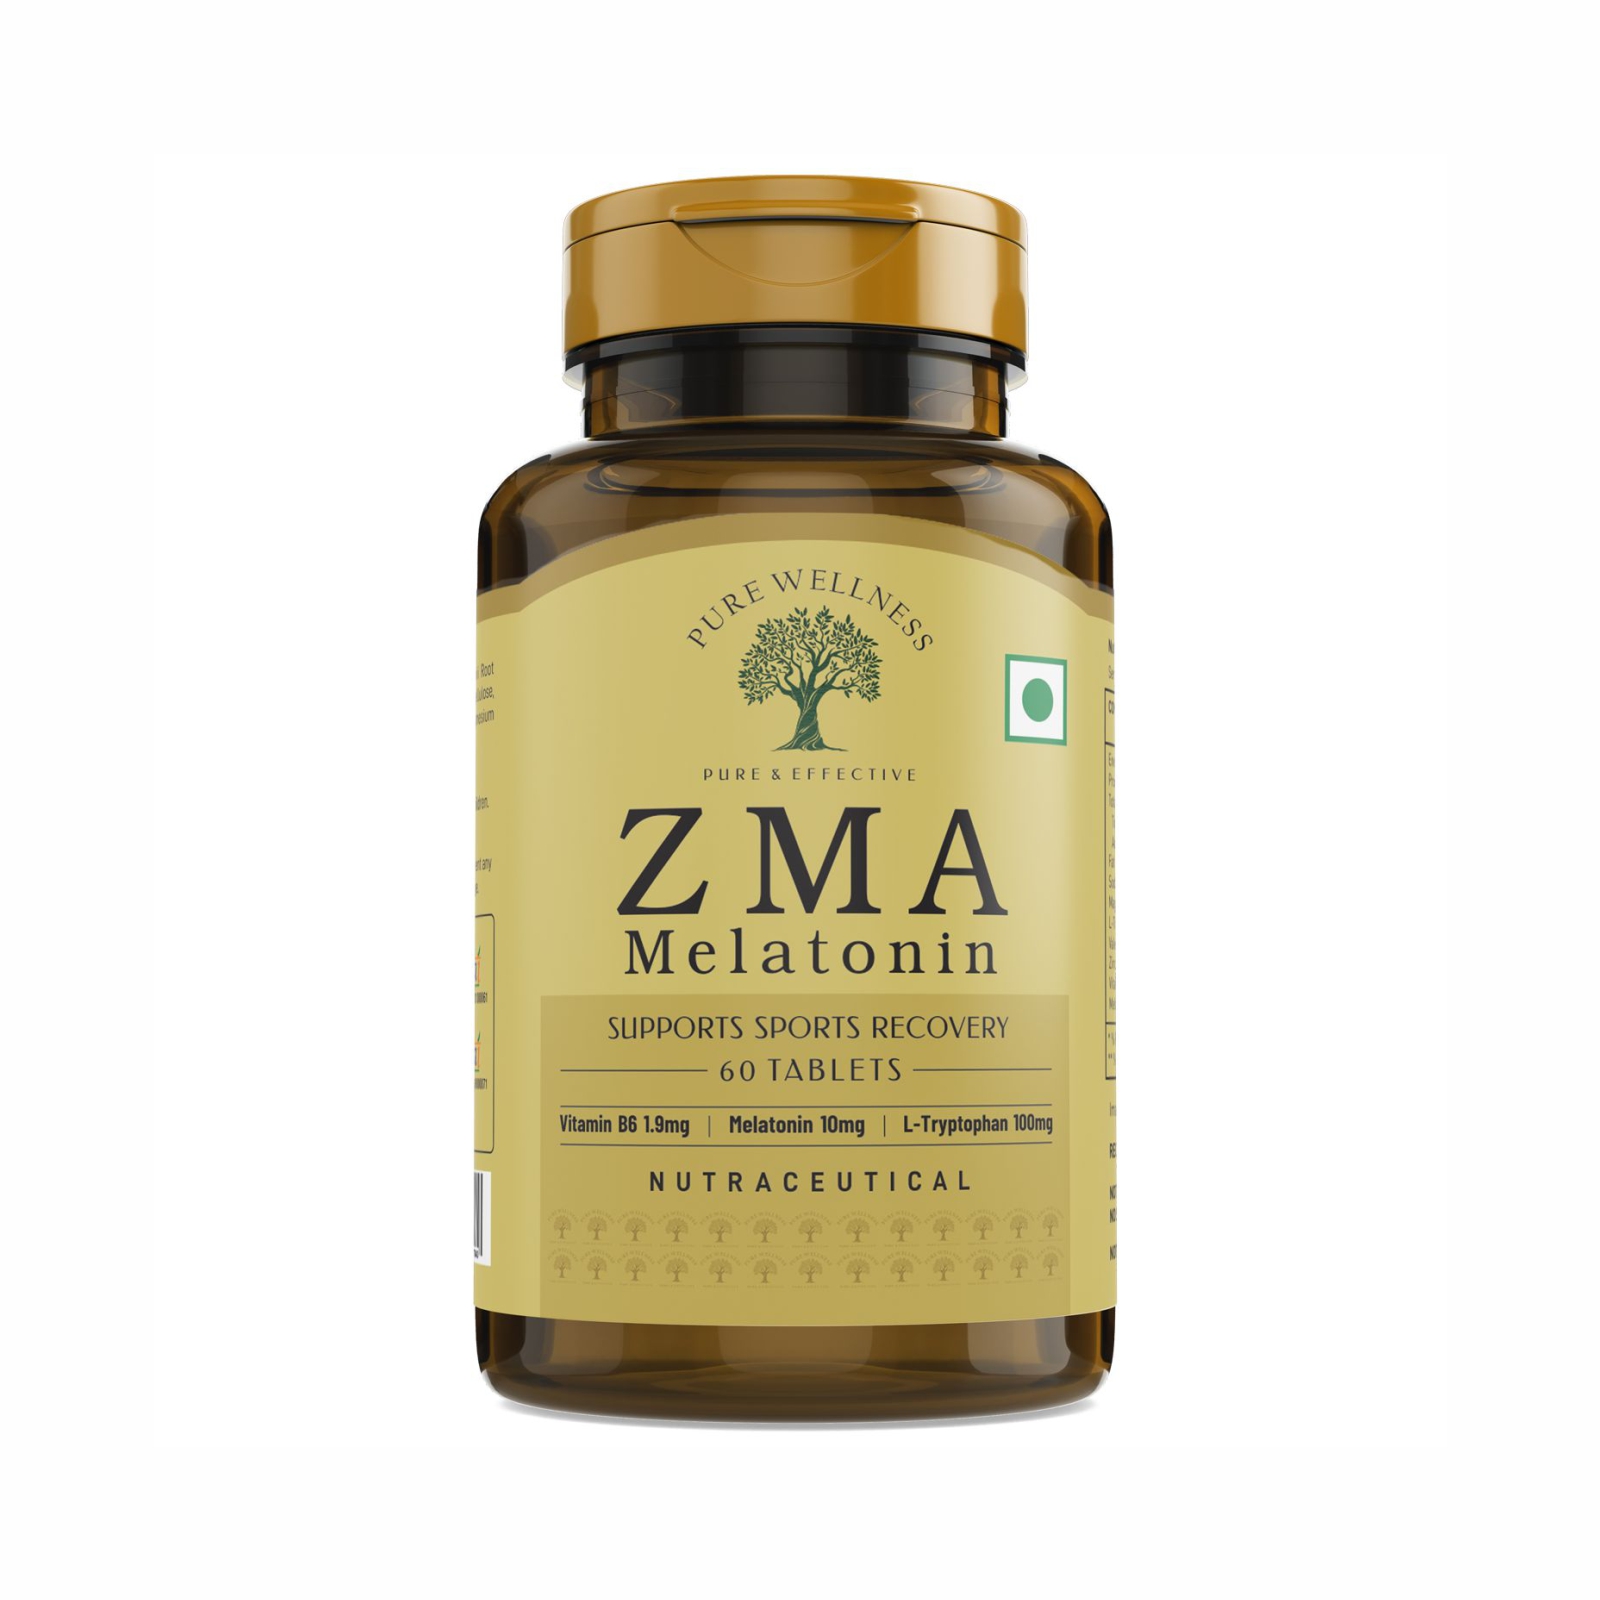 ZMA Melatonin – The Pure Wellness